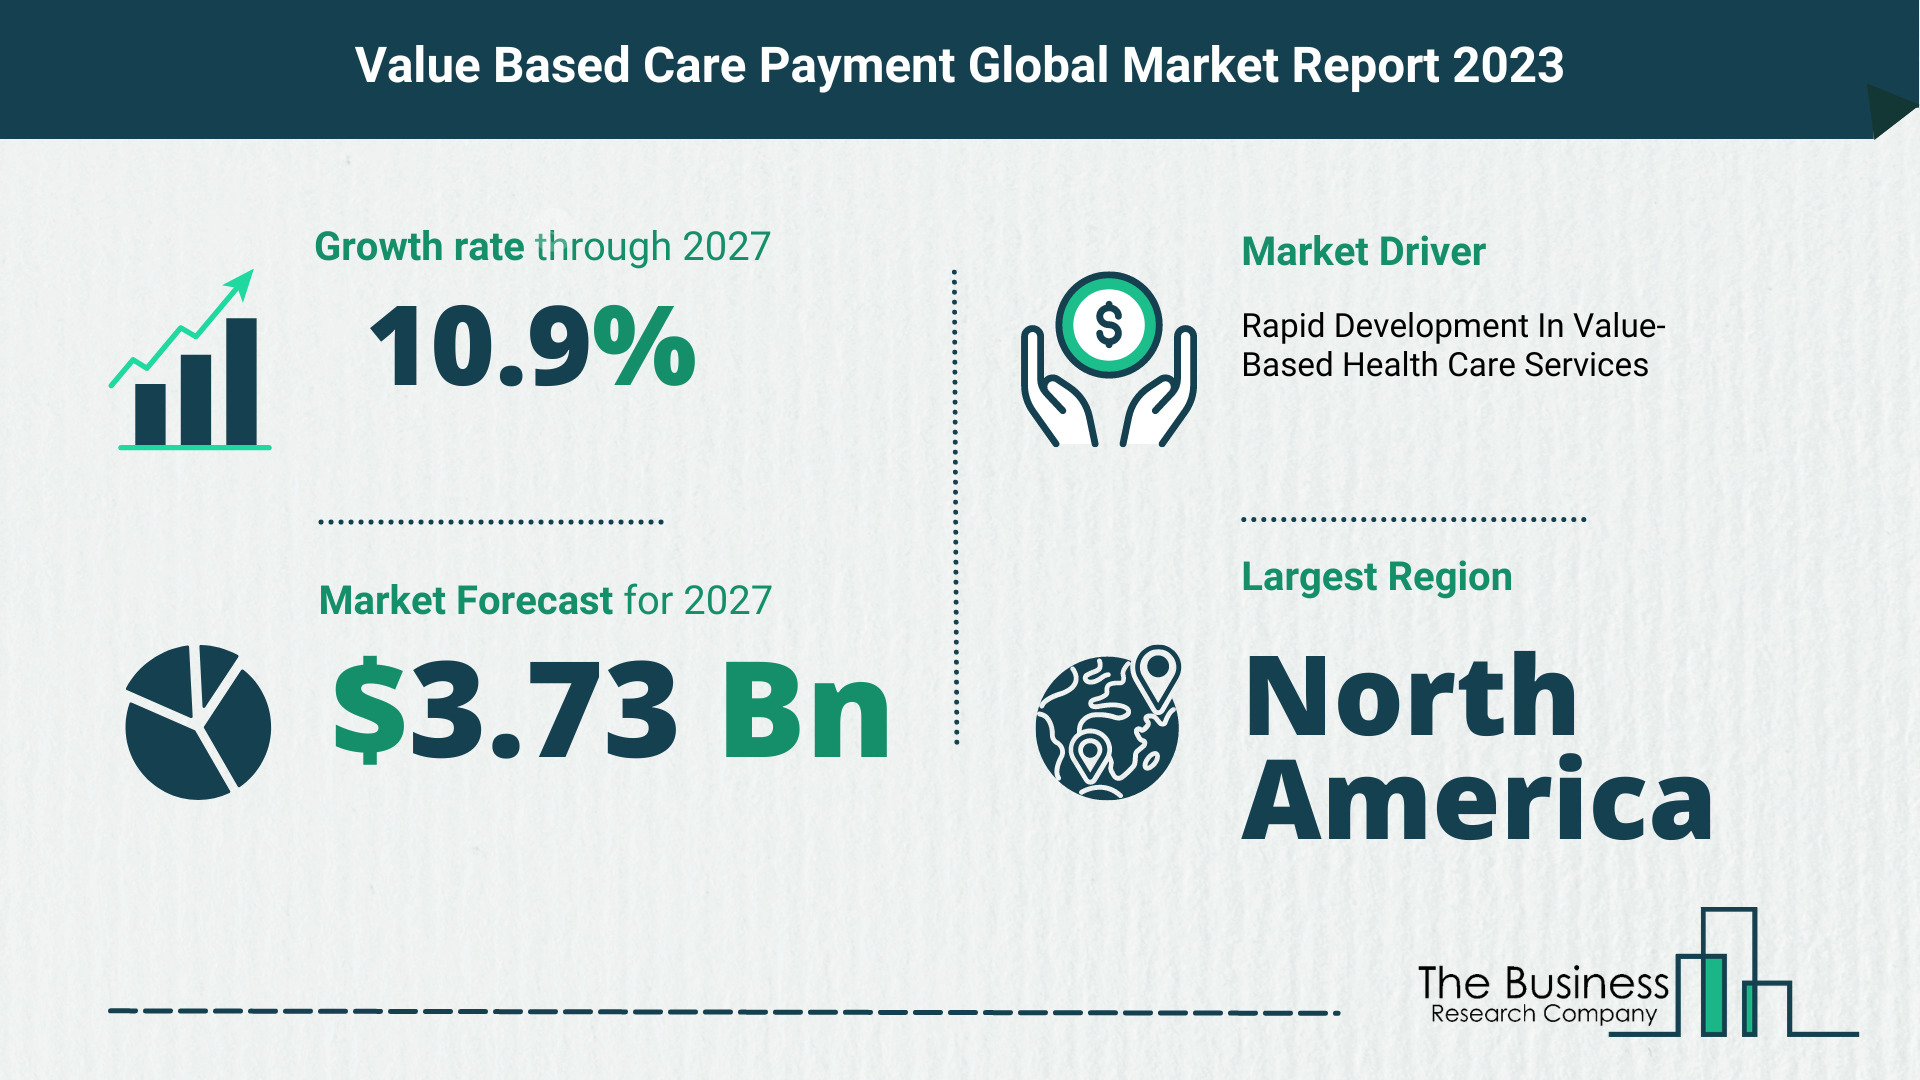 Global Value Based Care Payment Market